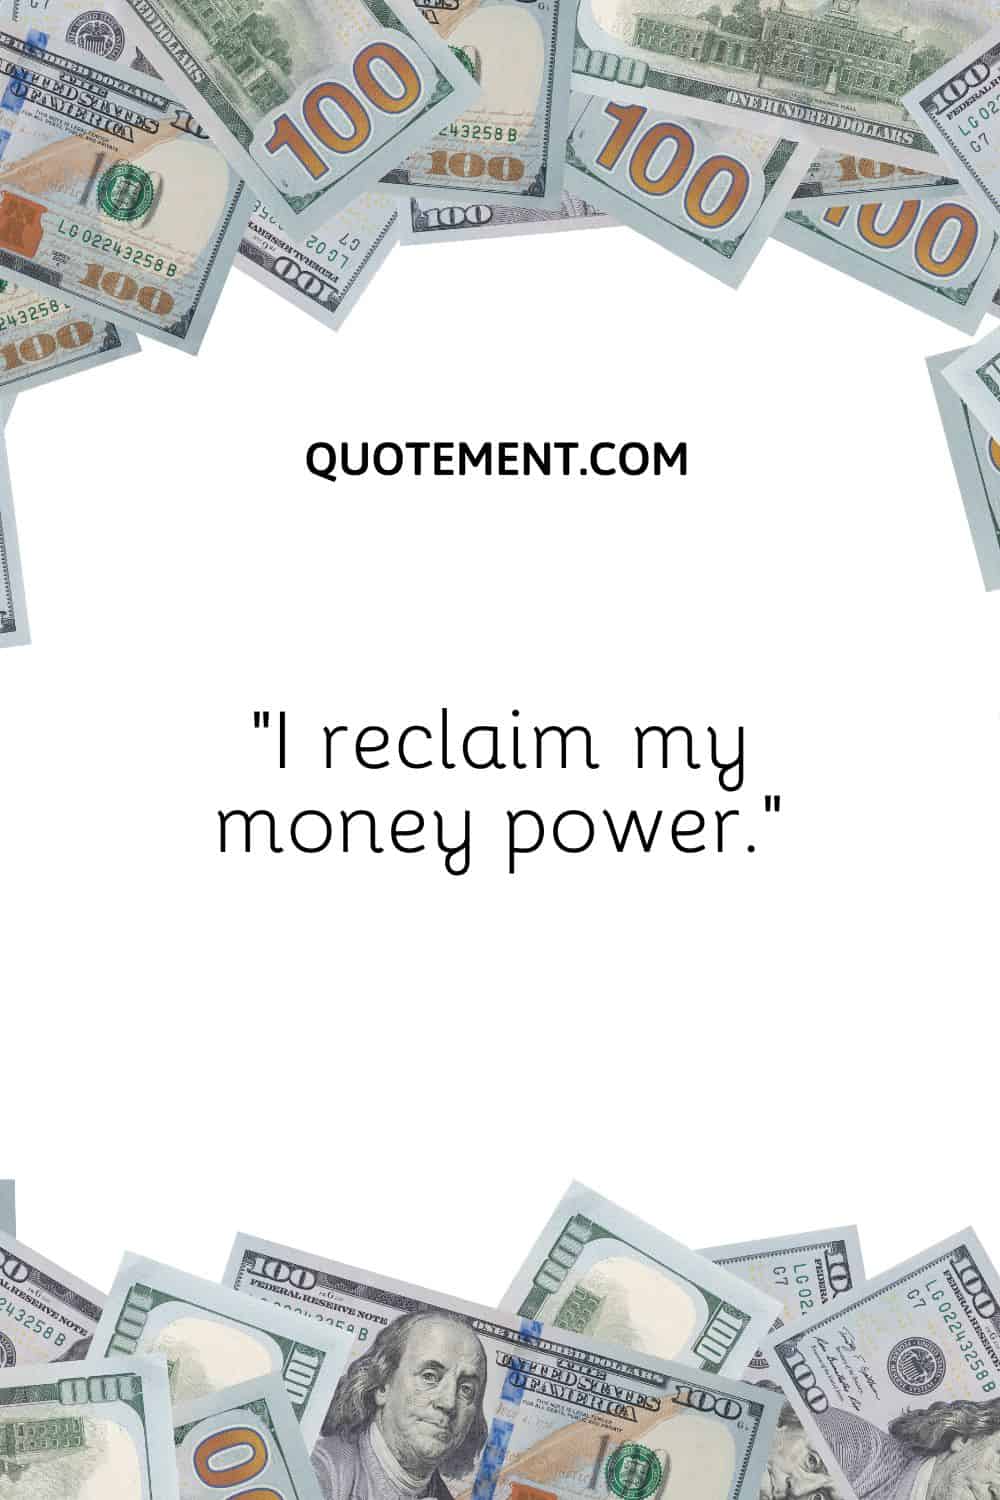 “I reclaim my money power.”